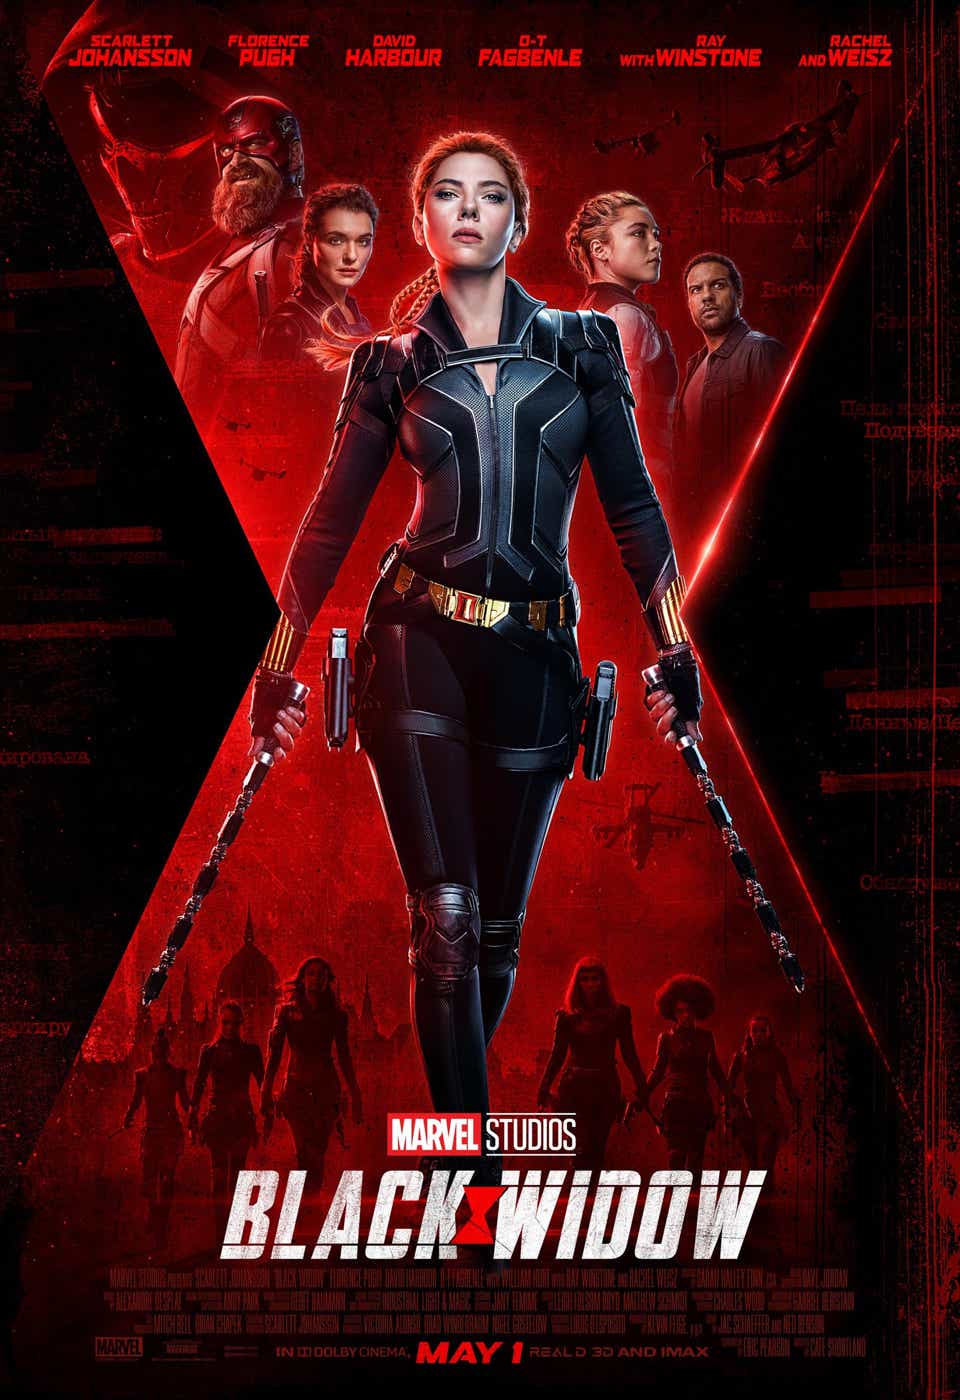 Black widow big tits stories Natasha Black Widow Sexism In Marvel Movies In Order